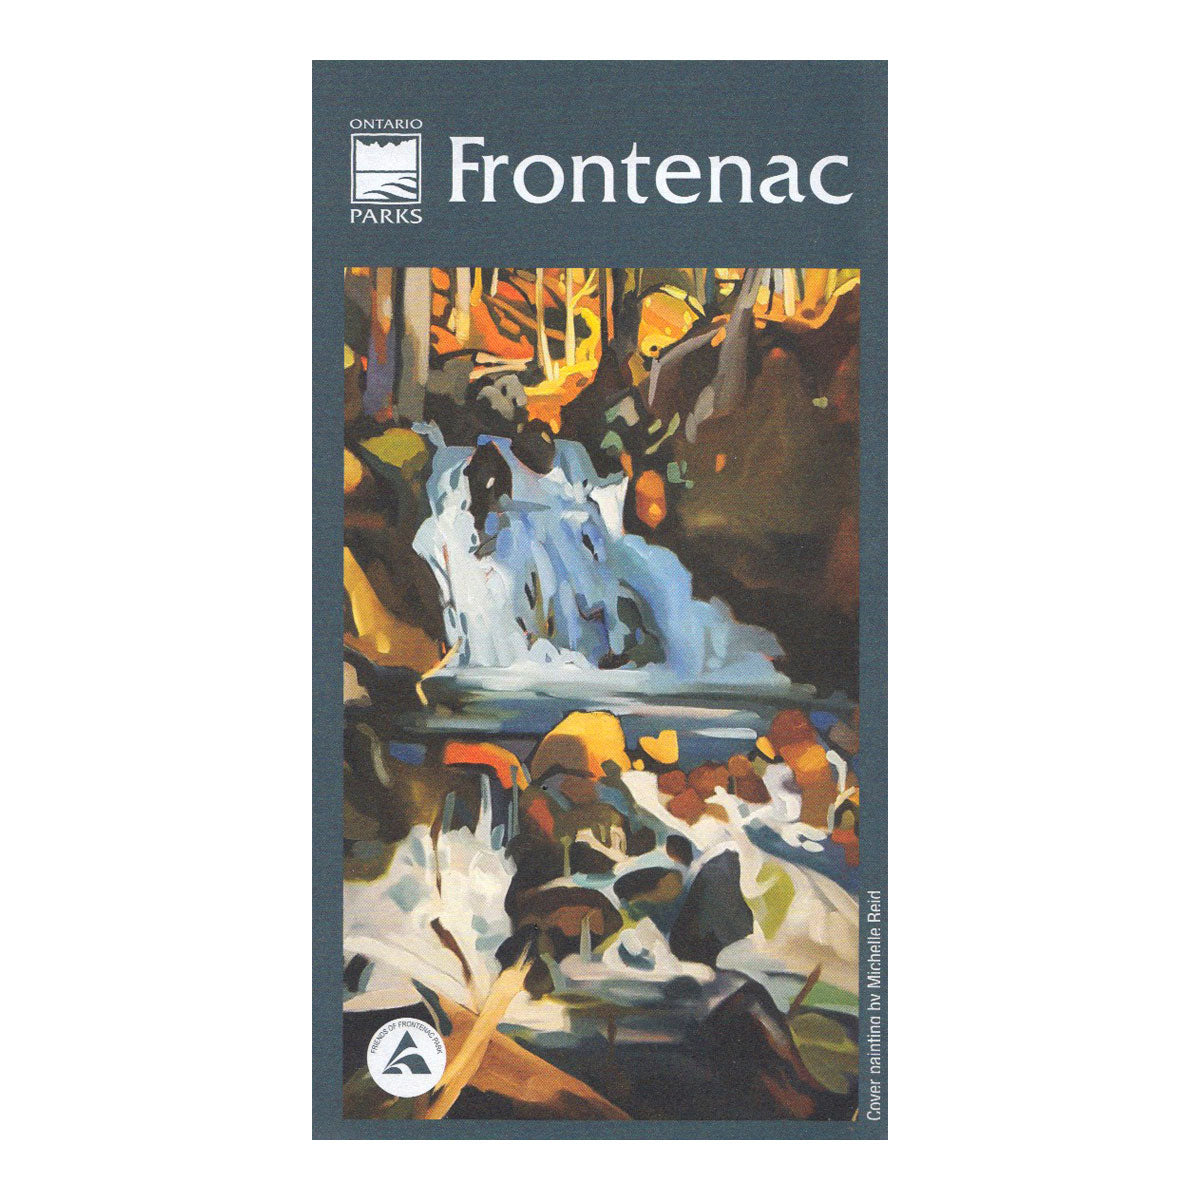 Frontenac Waterproof Map, cover image. 